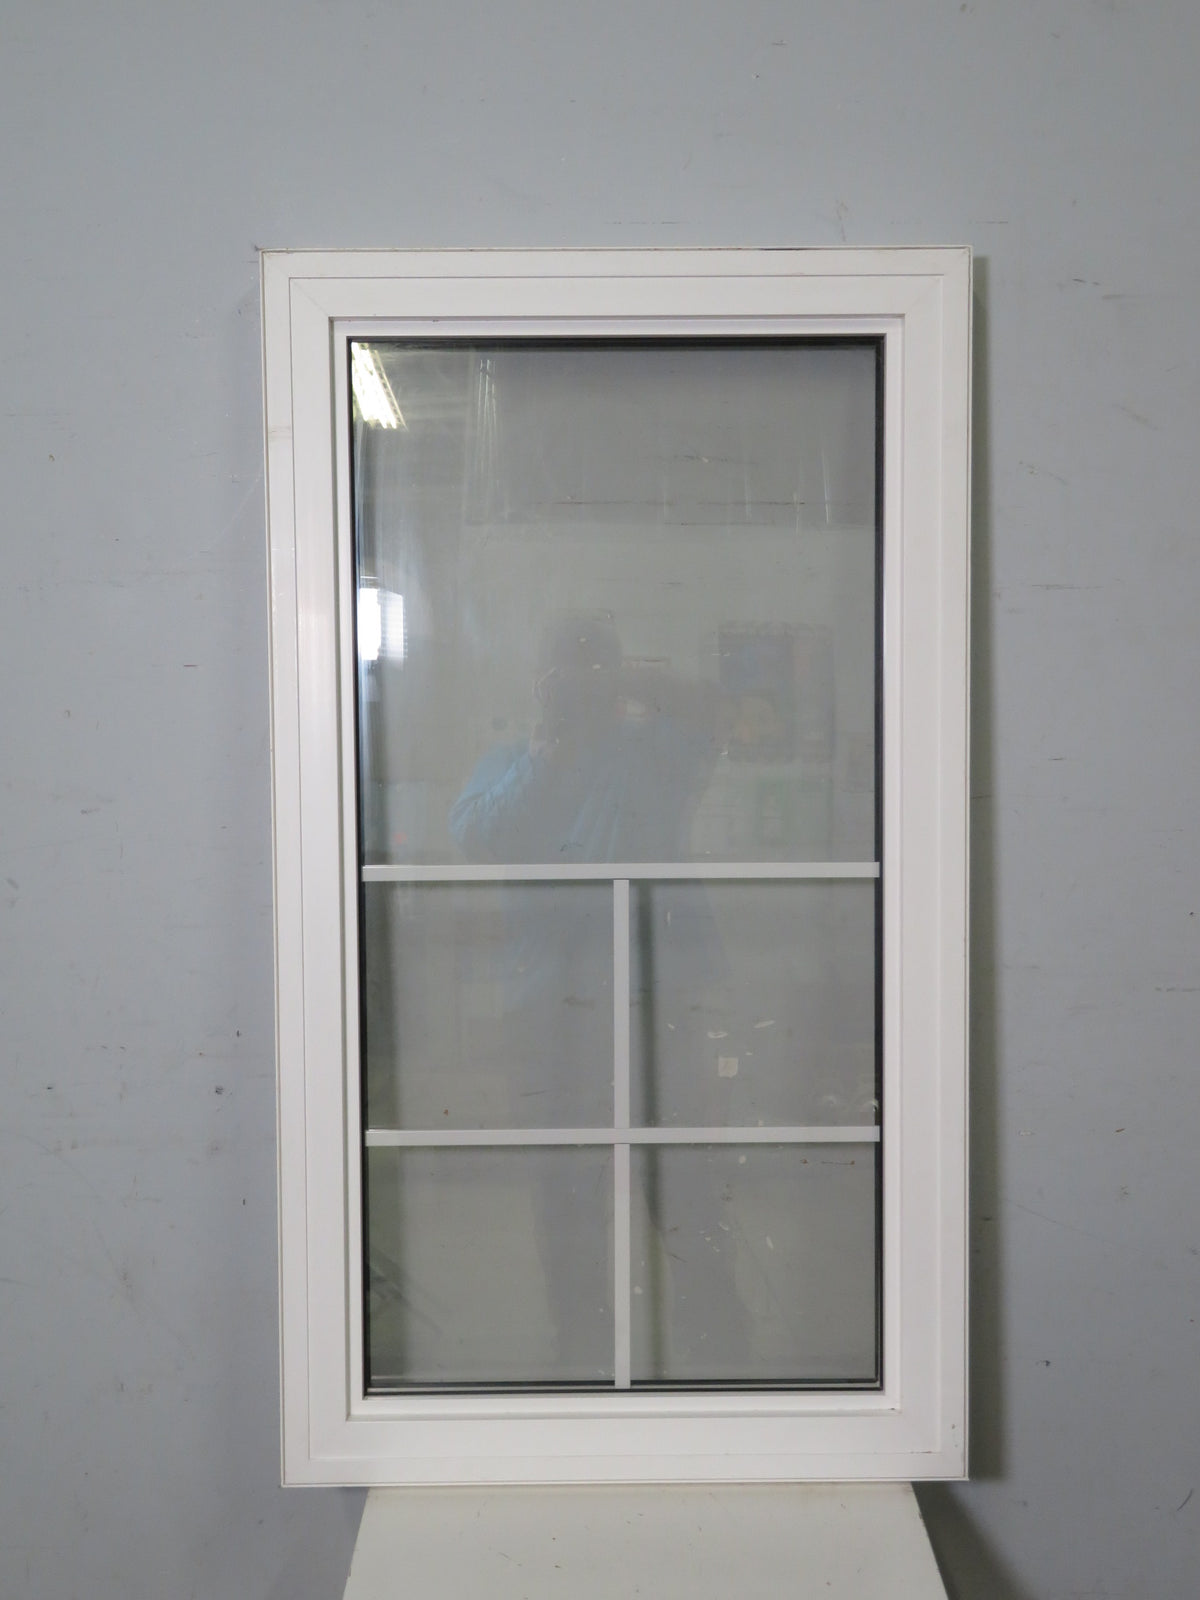 27 1/4" x 48 1/4" Fixed Window